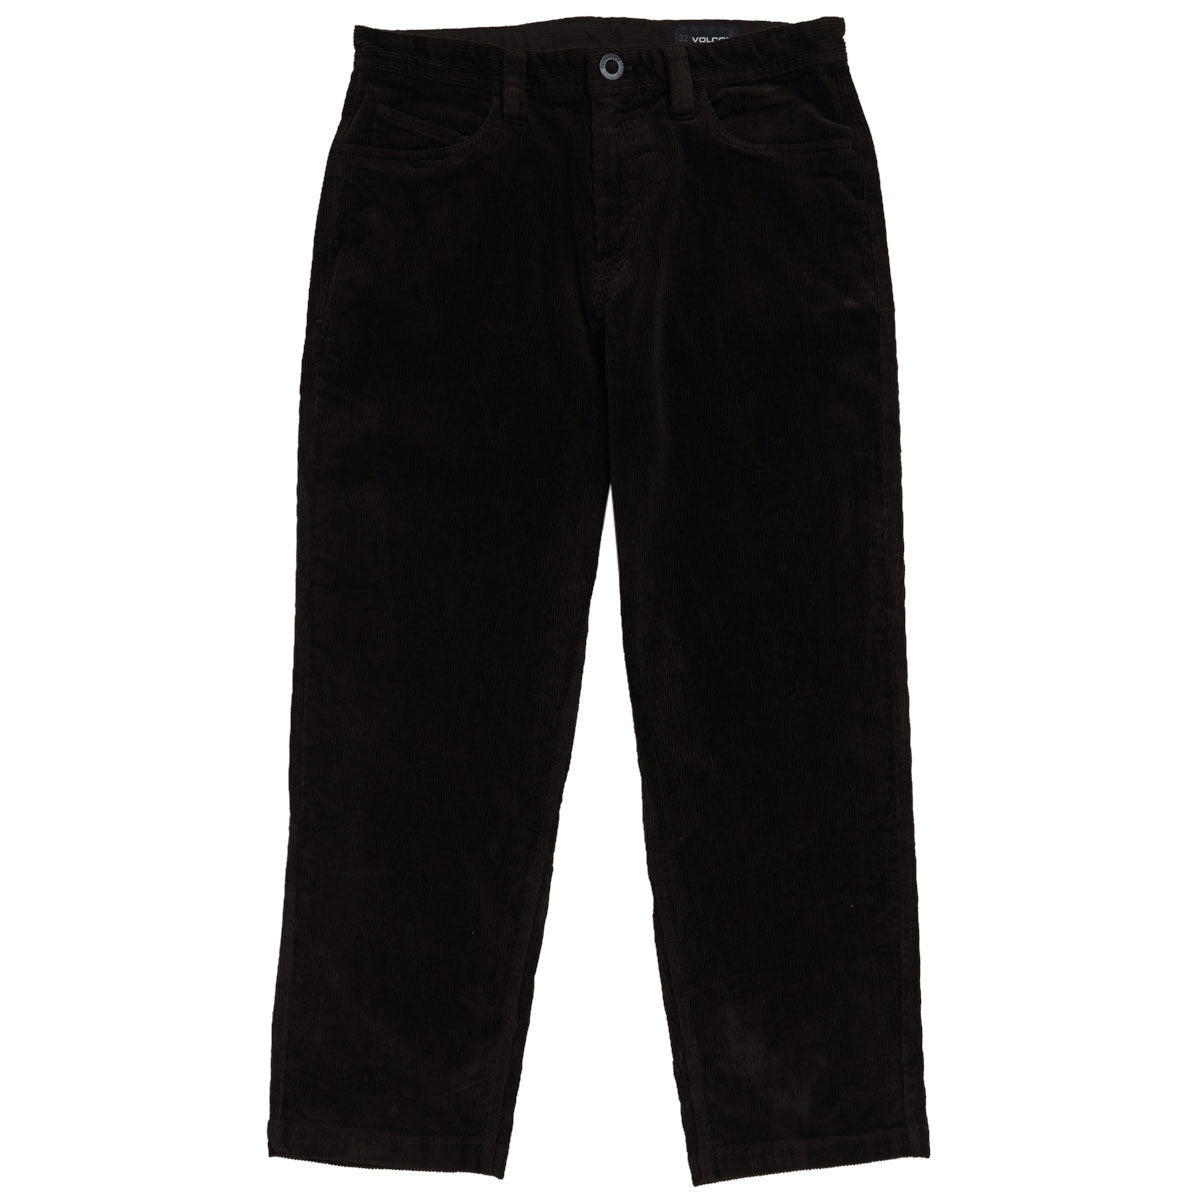 Volcom Modown Tapered Pants - Dark Brown image 1